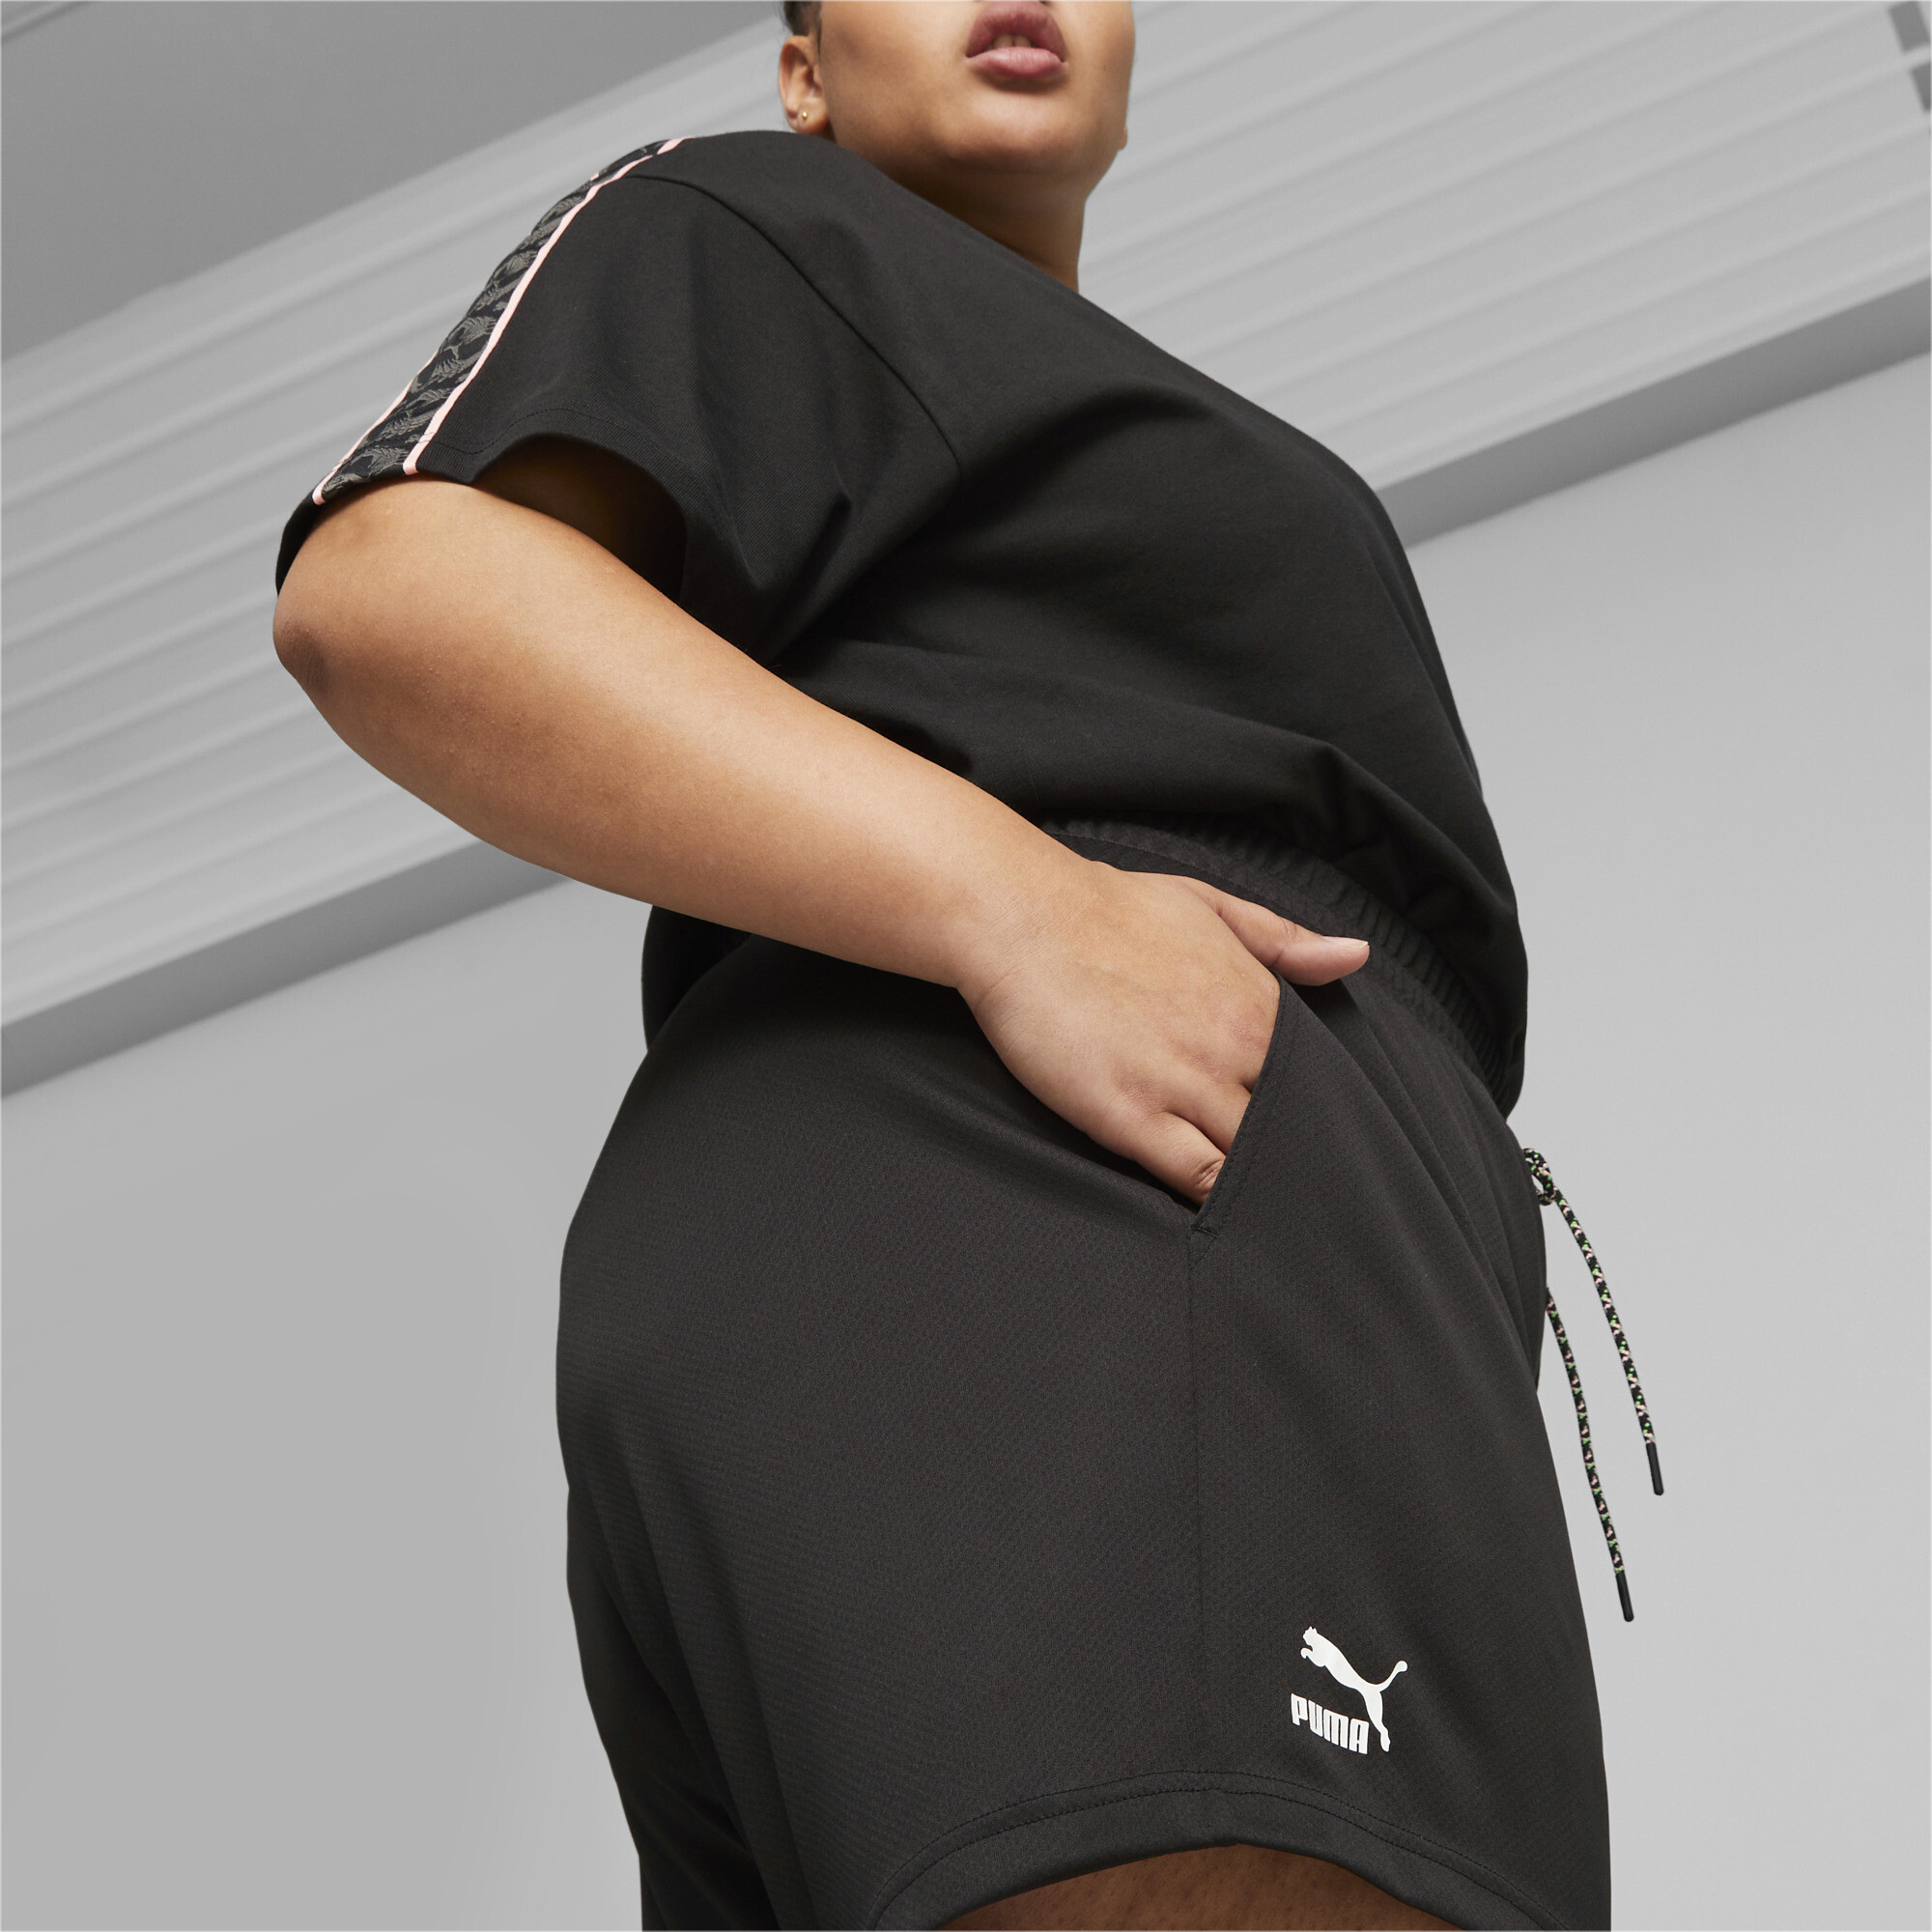 Women's PUMA Dare To Football Shorts In Black, Size Medium